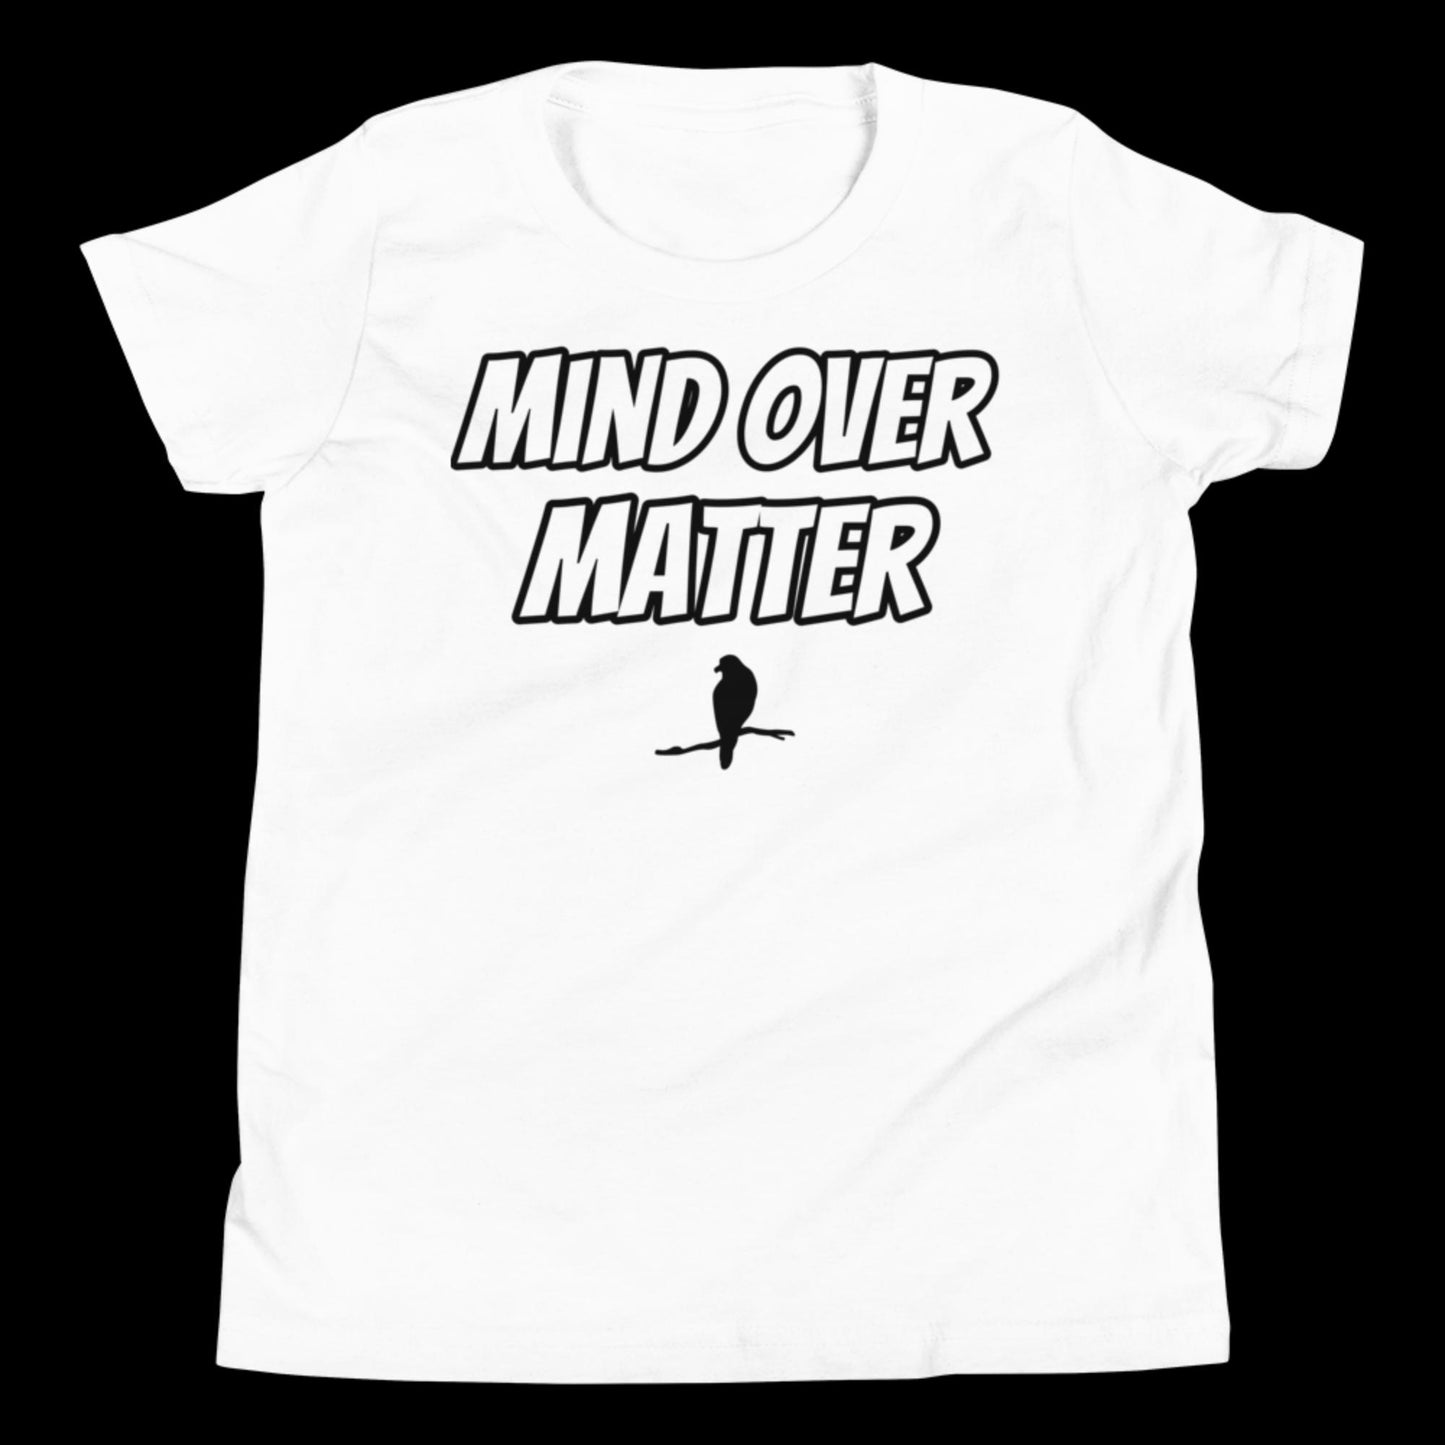 ATD "Mind Over Matter Youth Short Sleeve T-Shirt